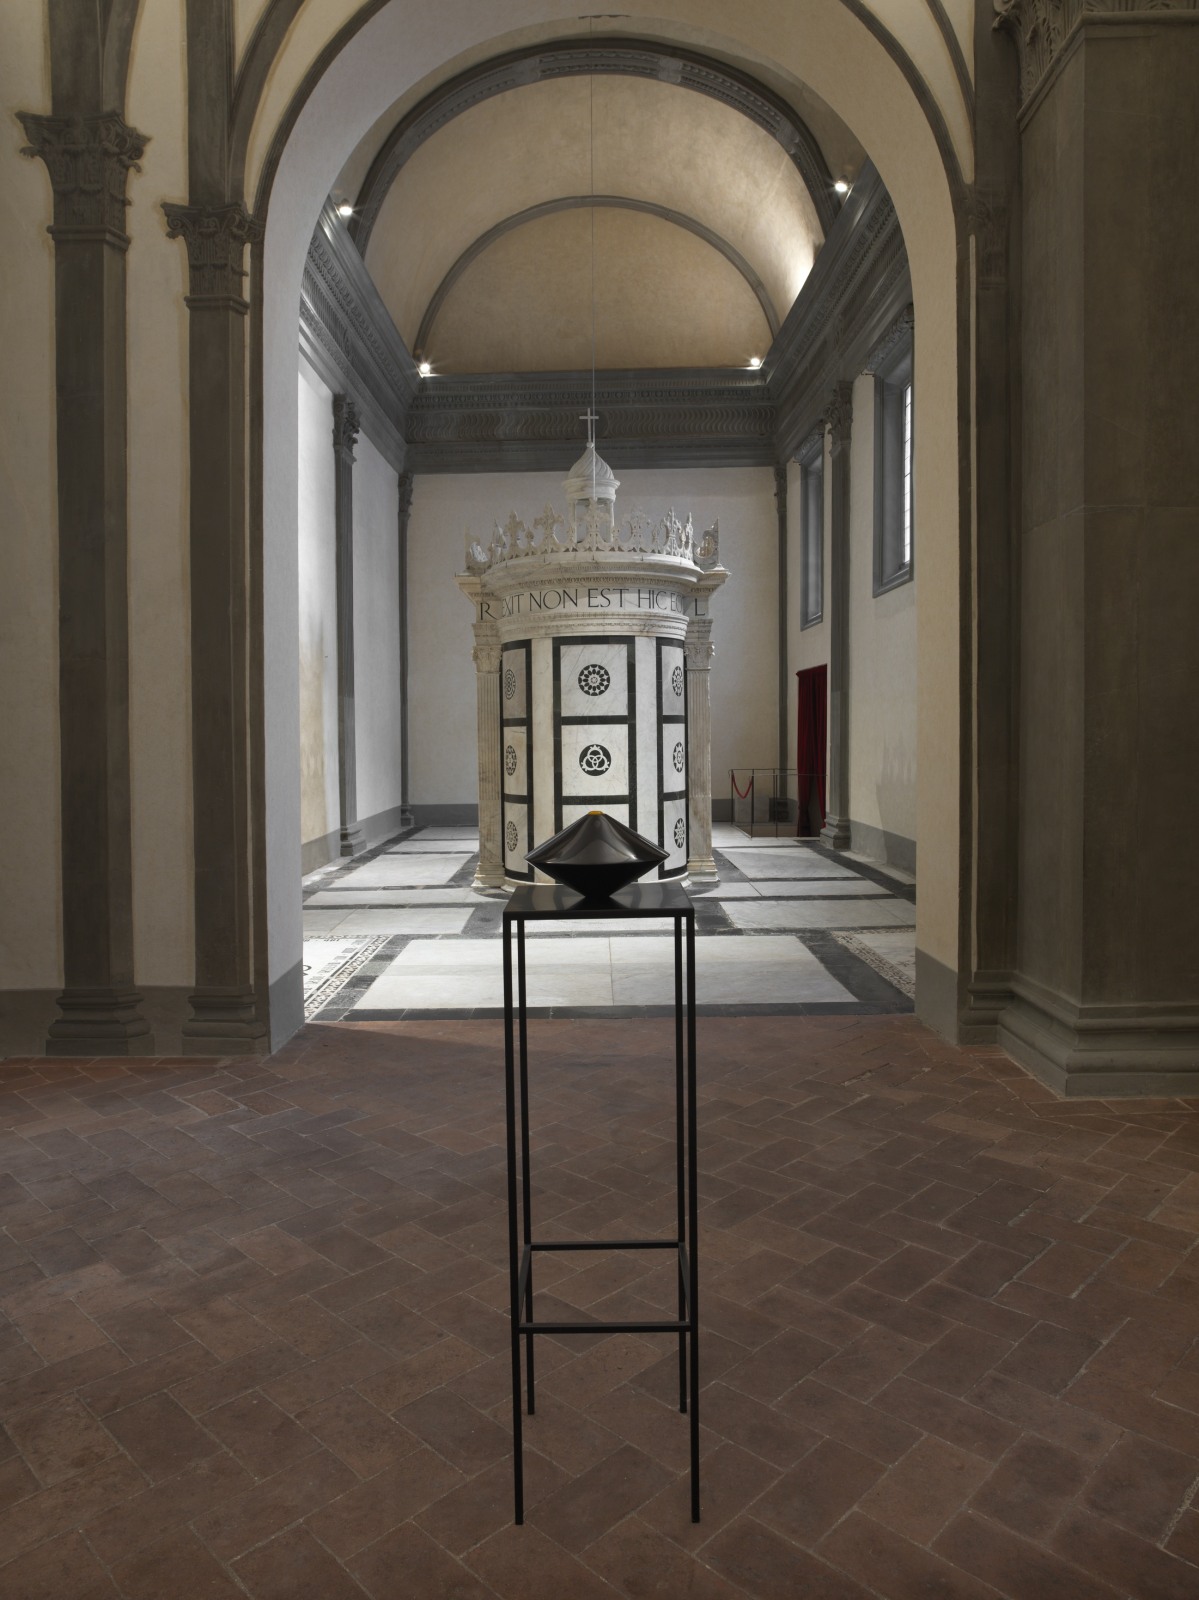 <div class="image_caption_container"><div class="image_caption"><p>Exhibition view,</p><p>Francesco Gennari, Museo Marino Marini, Florence, Italy, 2014</p><p> </p></div></div>